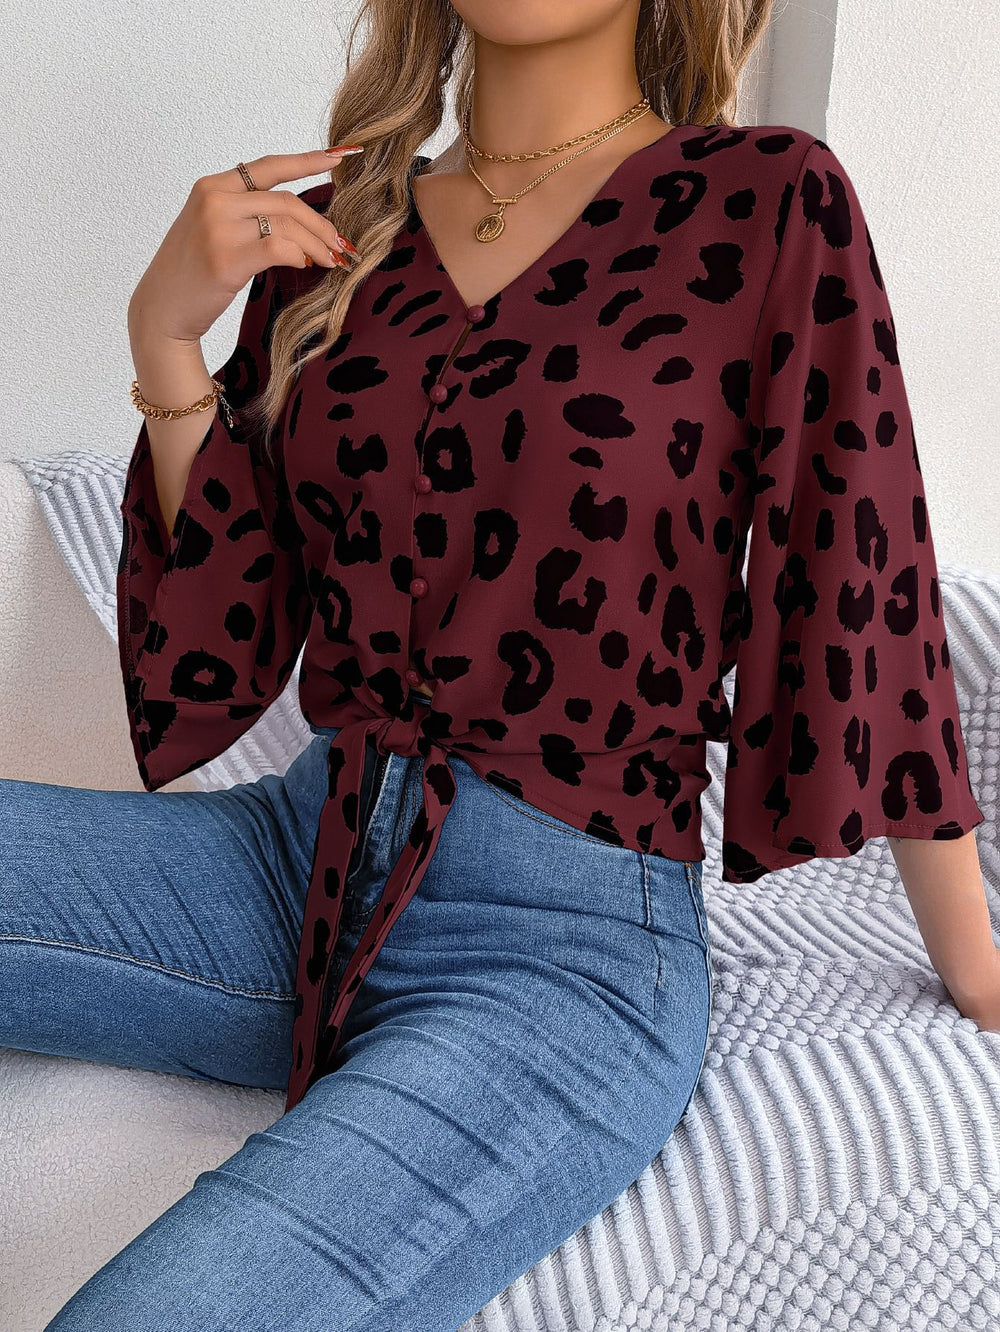 Spring Summer Casual Leopard Print Self Tie Chiffon Shirt Top Women Clothing